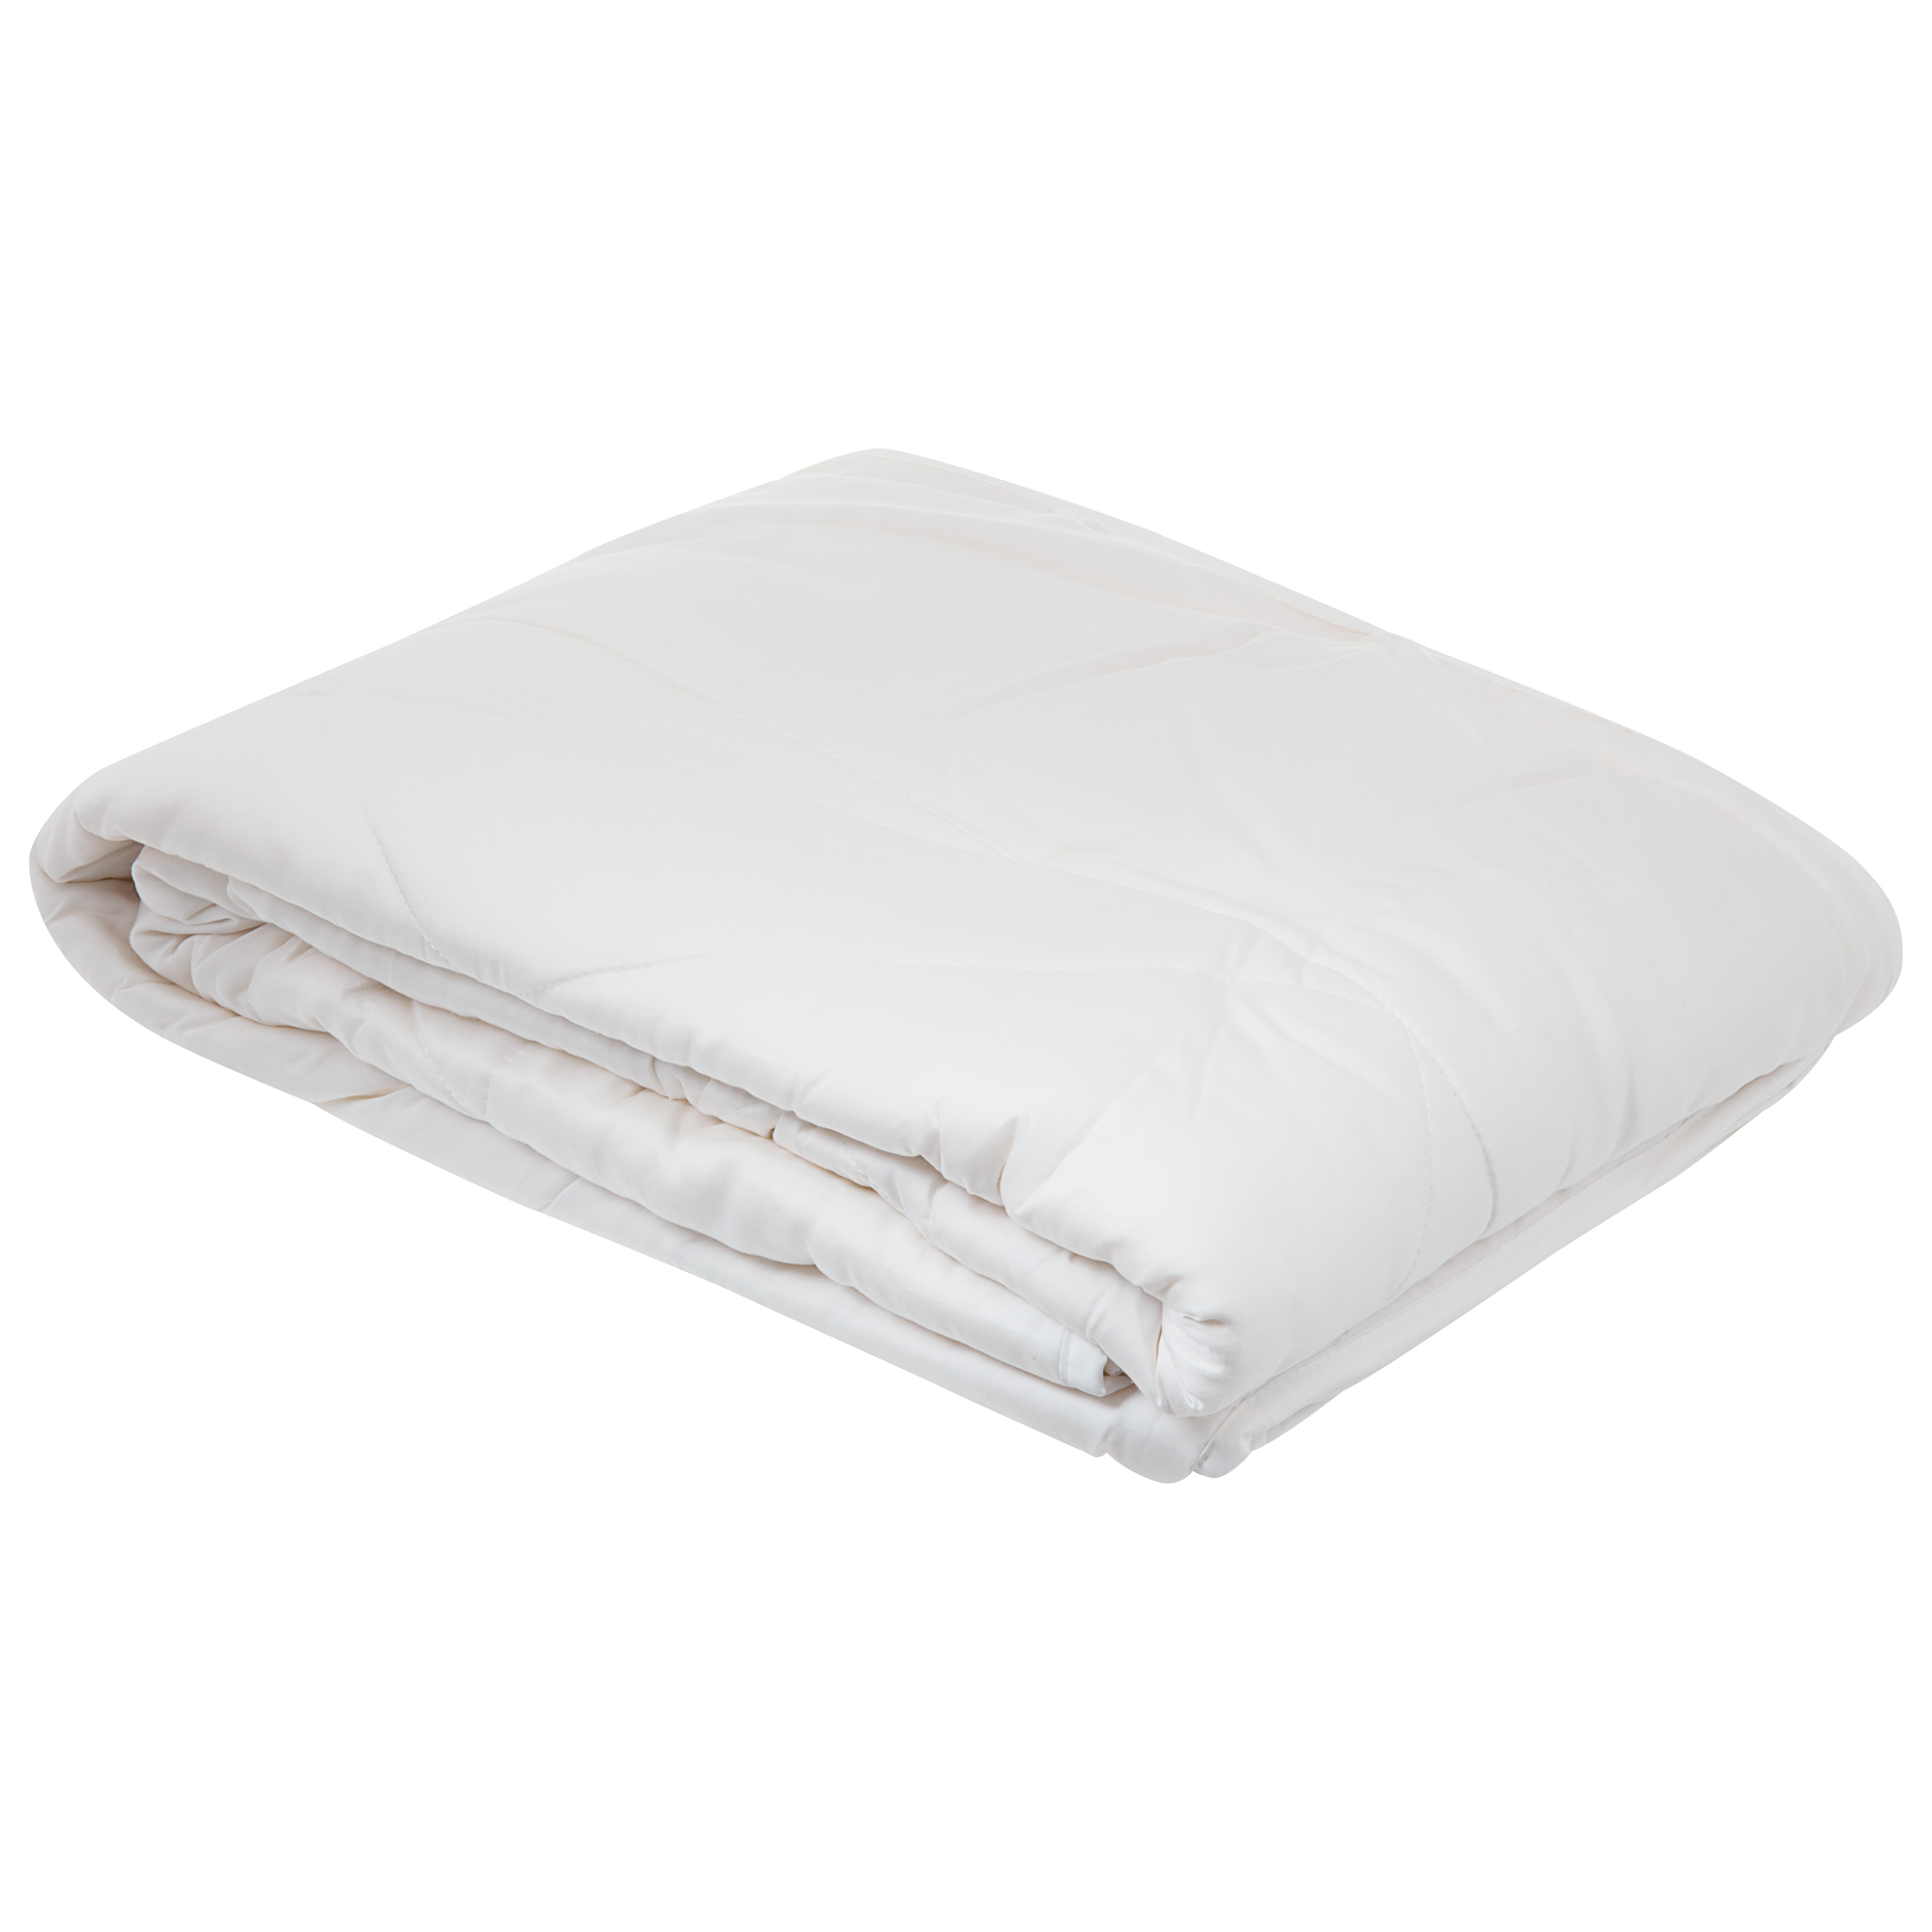 Одеяло 4 сезона Wonne Traum 150х210, цвет белый, размер 150х210 см - фото 1